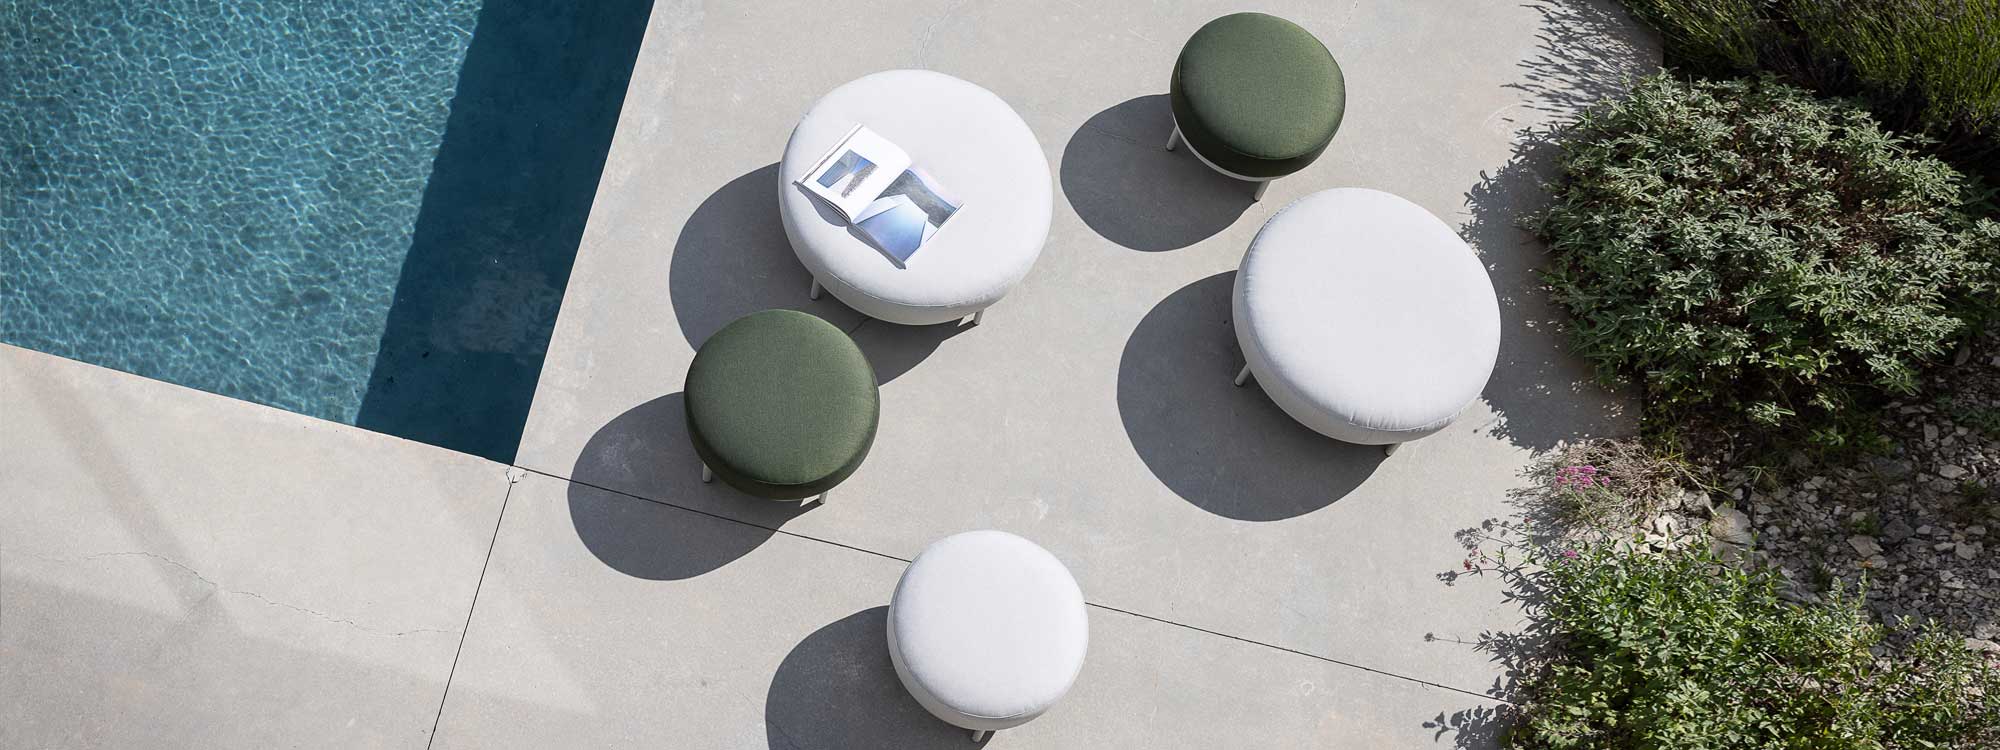 Baza round garden pouf is a modern outdoor foot stool & exterior ottoman is durable garden furniture by Todus contemporary garden furniture